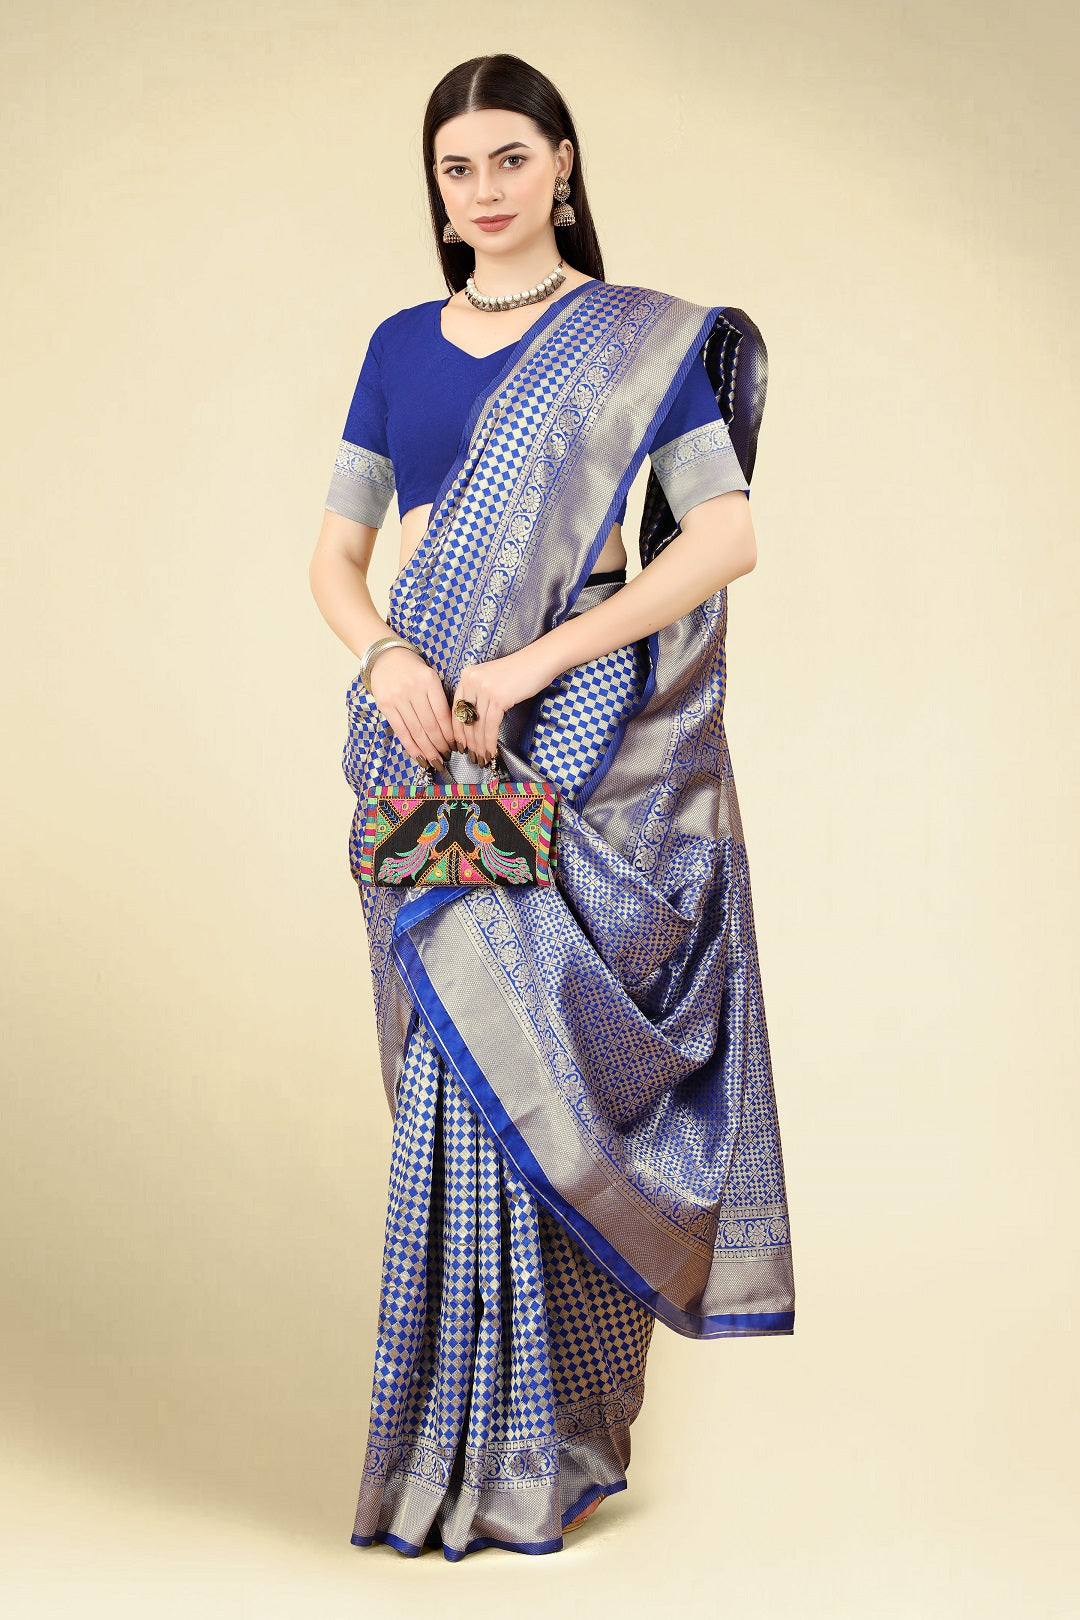 Women's Designer Saree Collection - Dwija Fashion